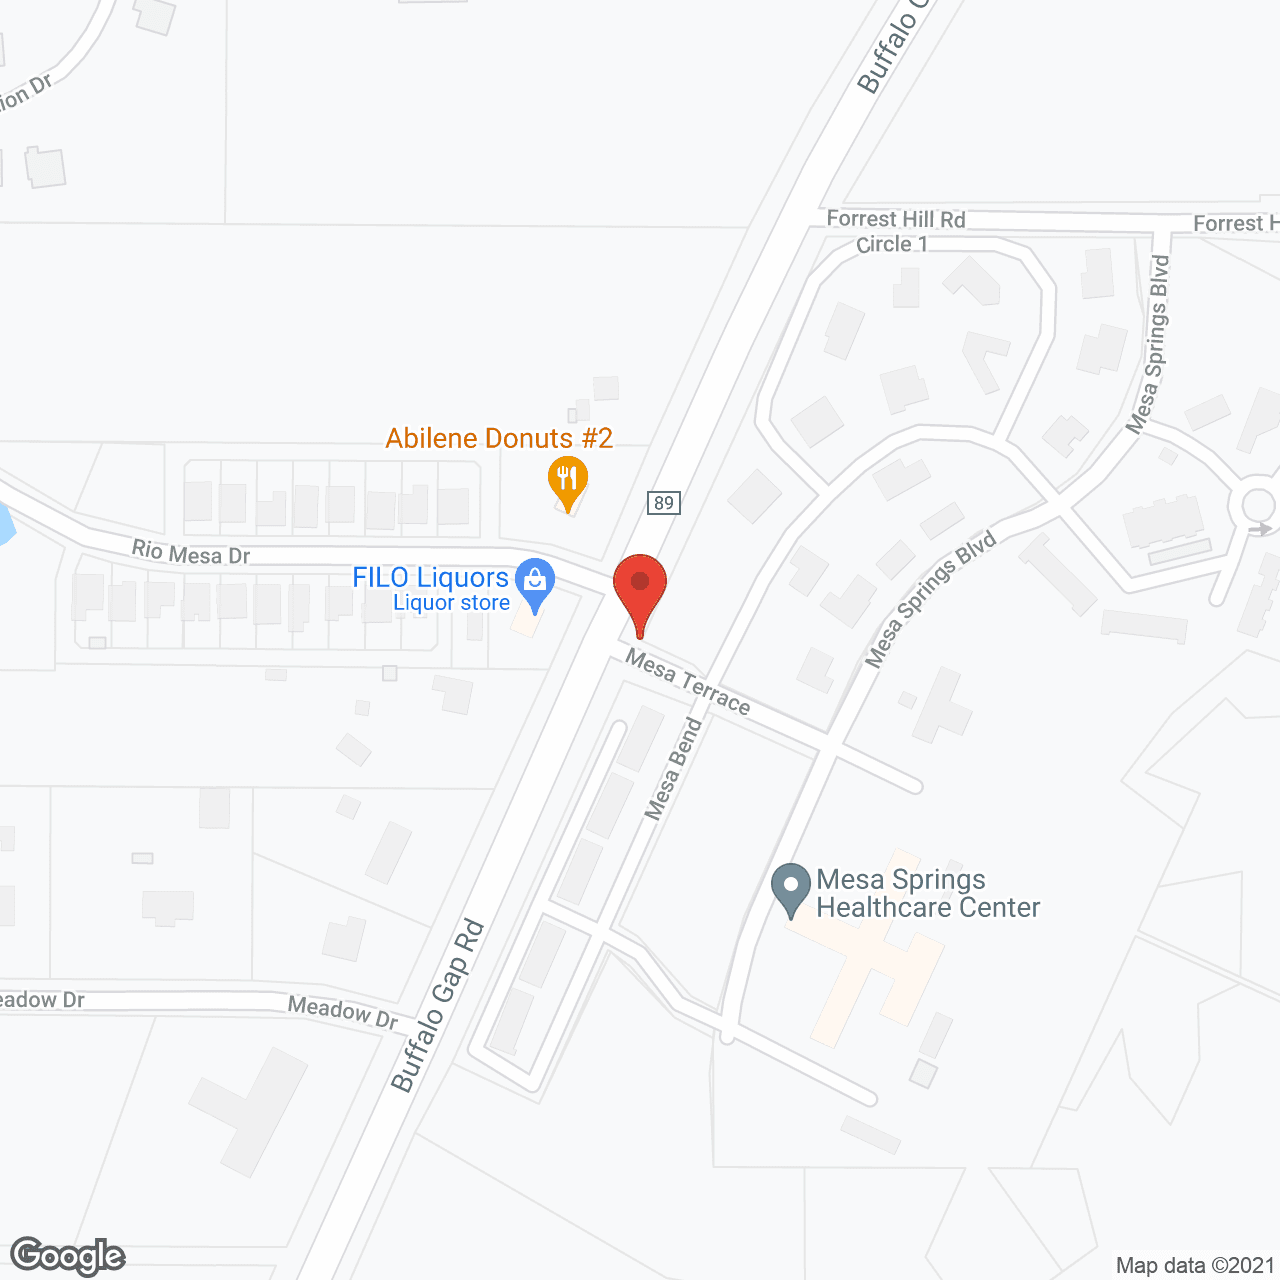 Mesa Springs Healthcare Center in google map